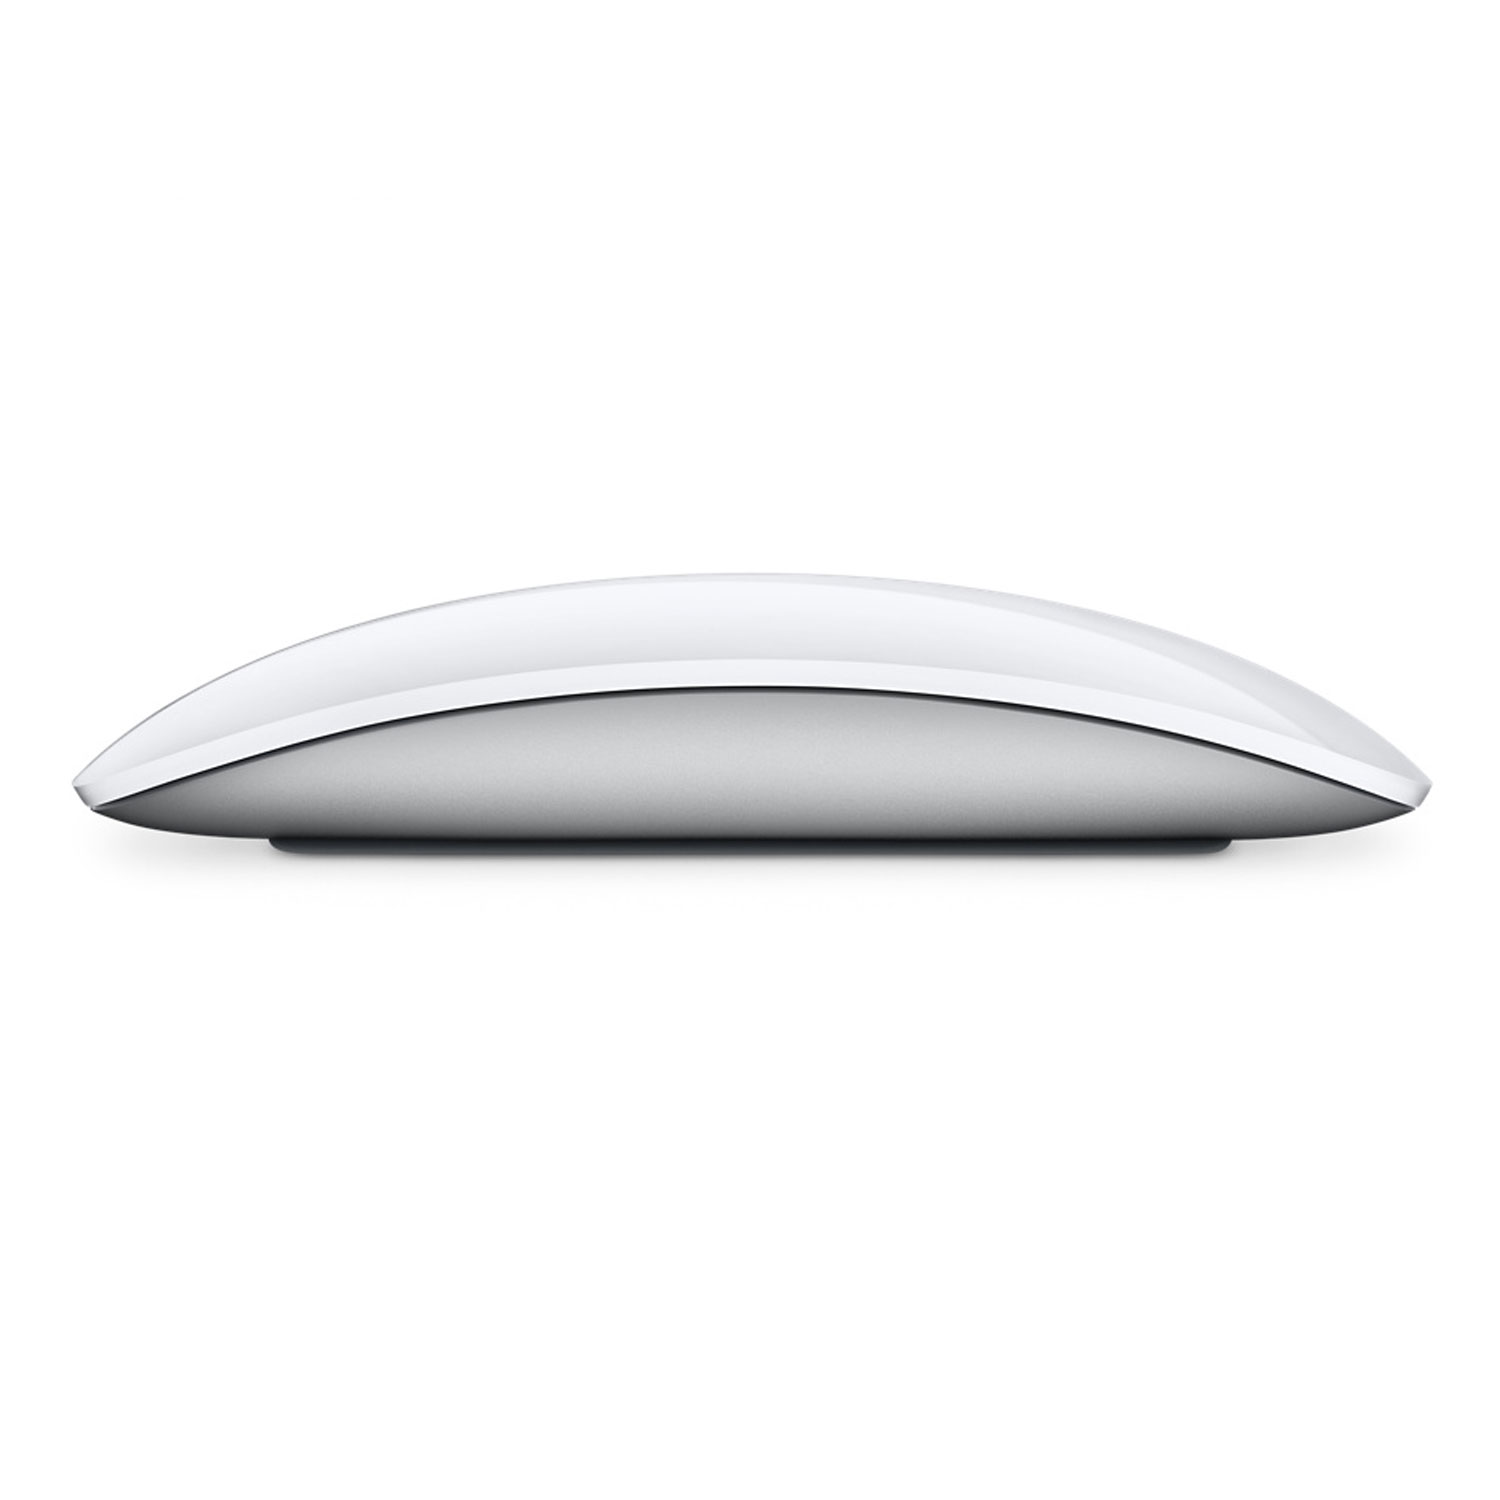 Mouse Apple Magic 2 MLA02ZM/A Sem Fio / Bluetooth - Branco